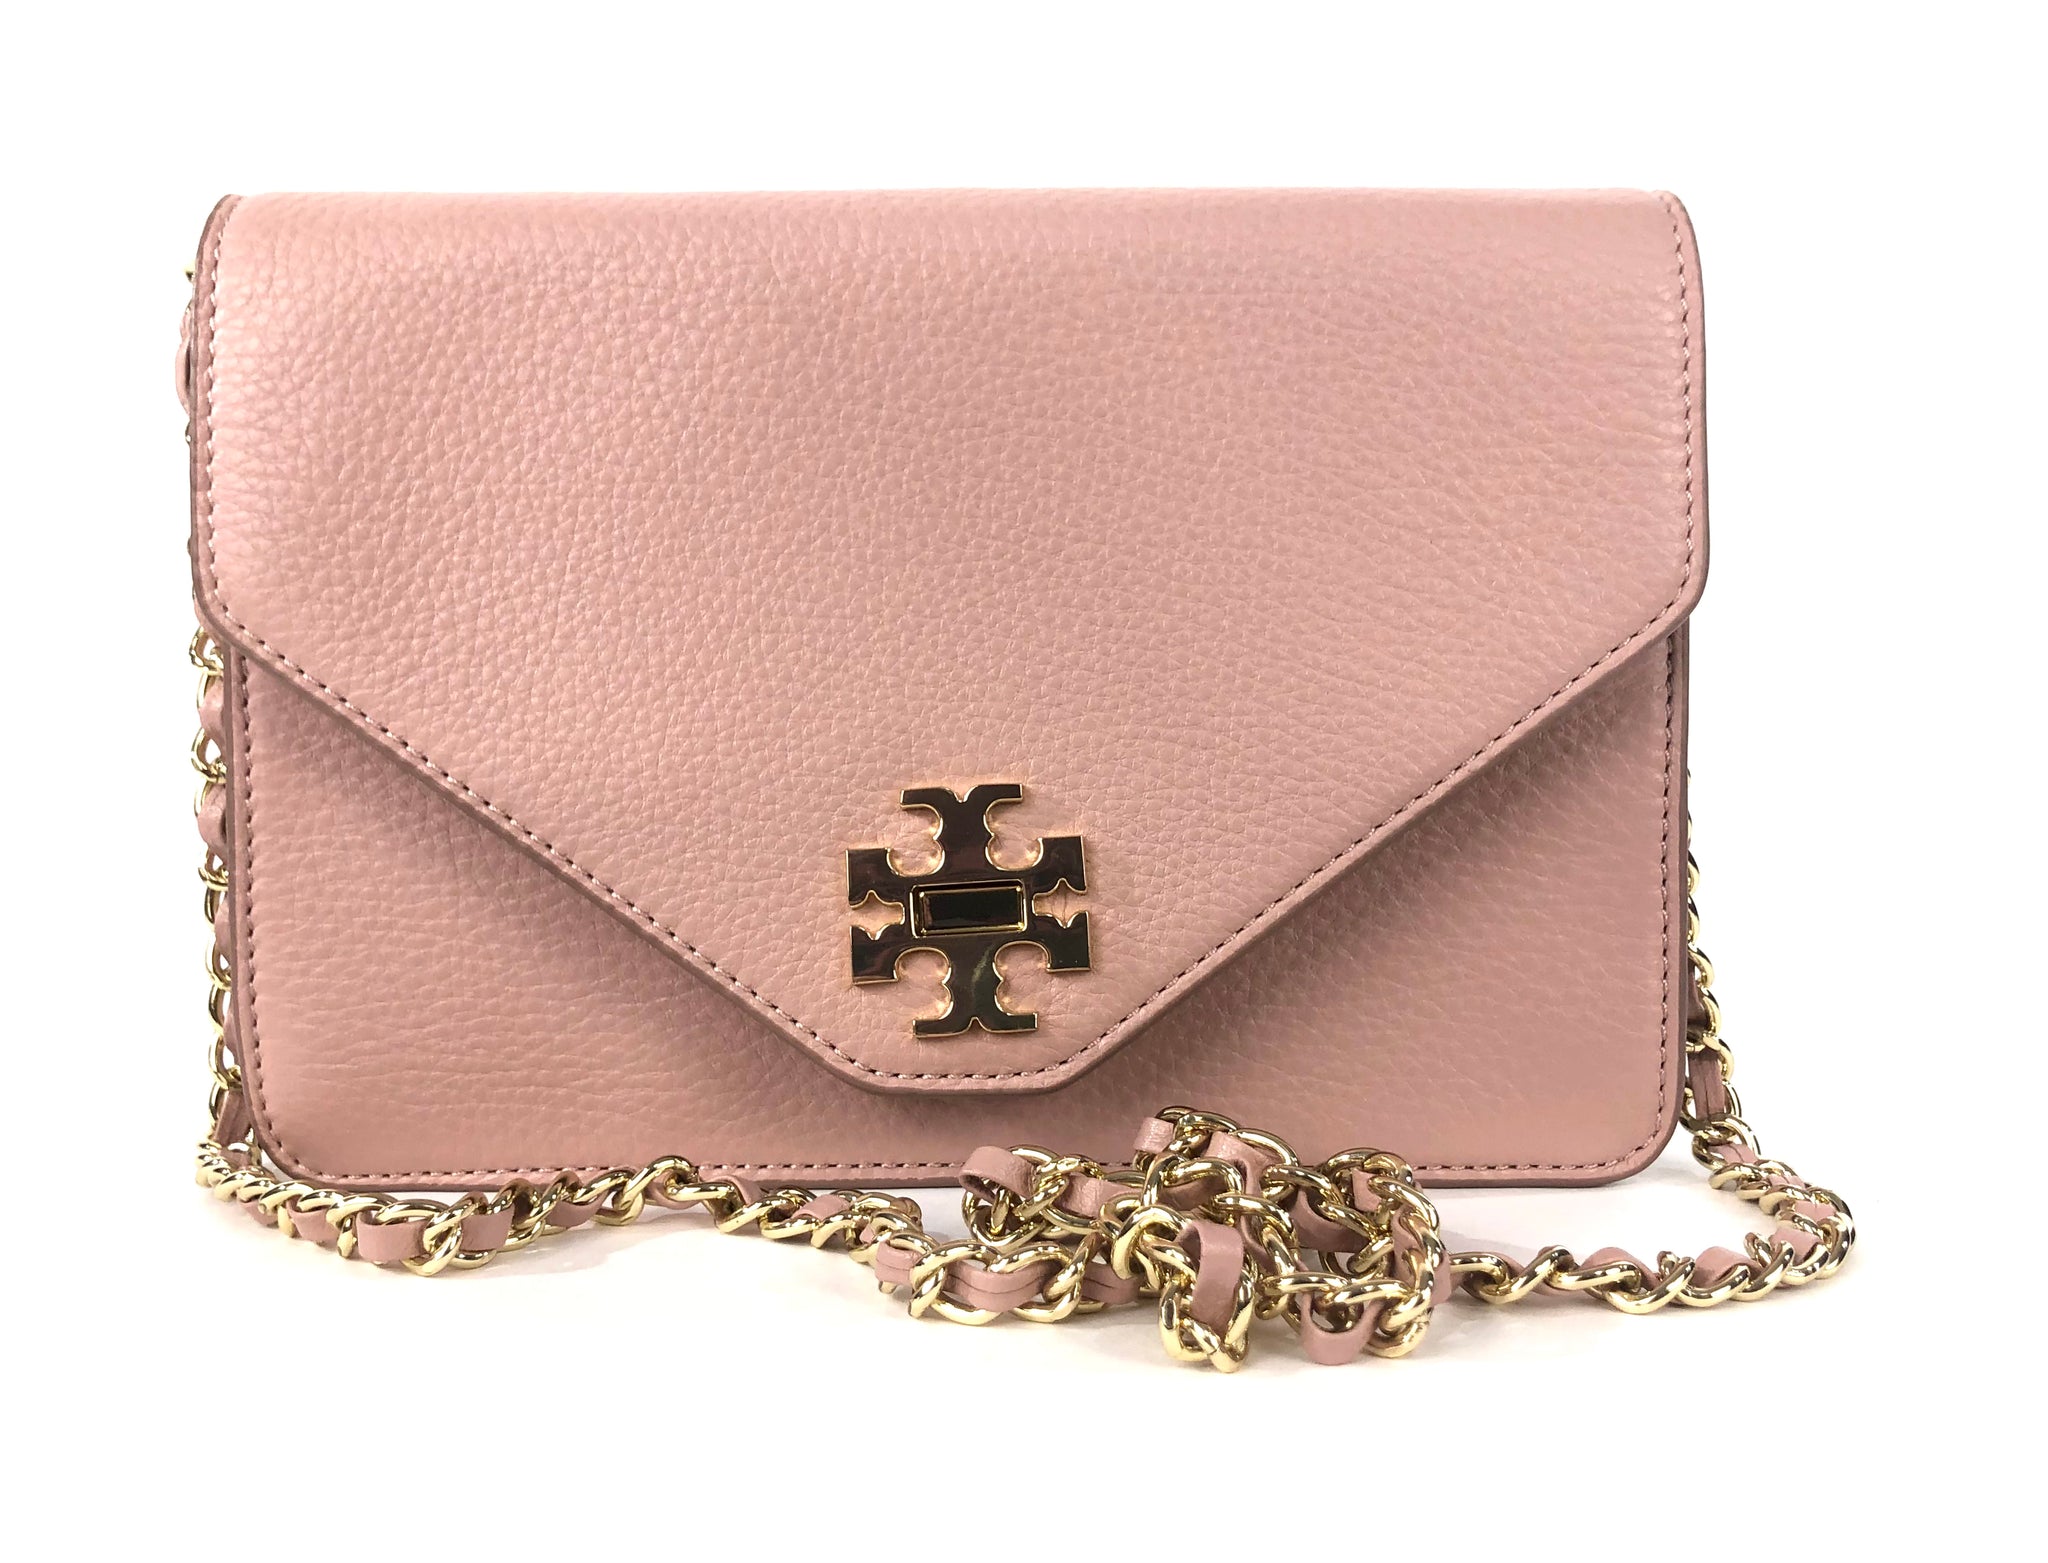 Pink Pebble Leather Convertible Clutch - Shoulder Bag - Crossbody